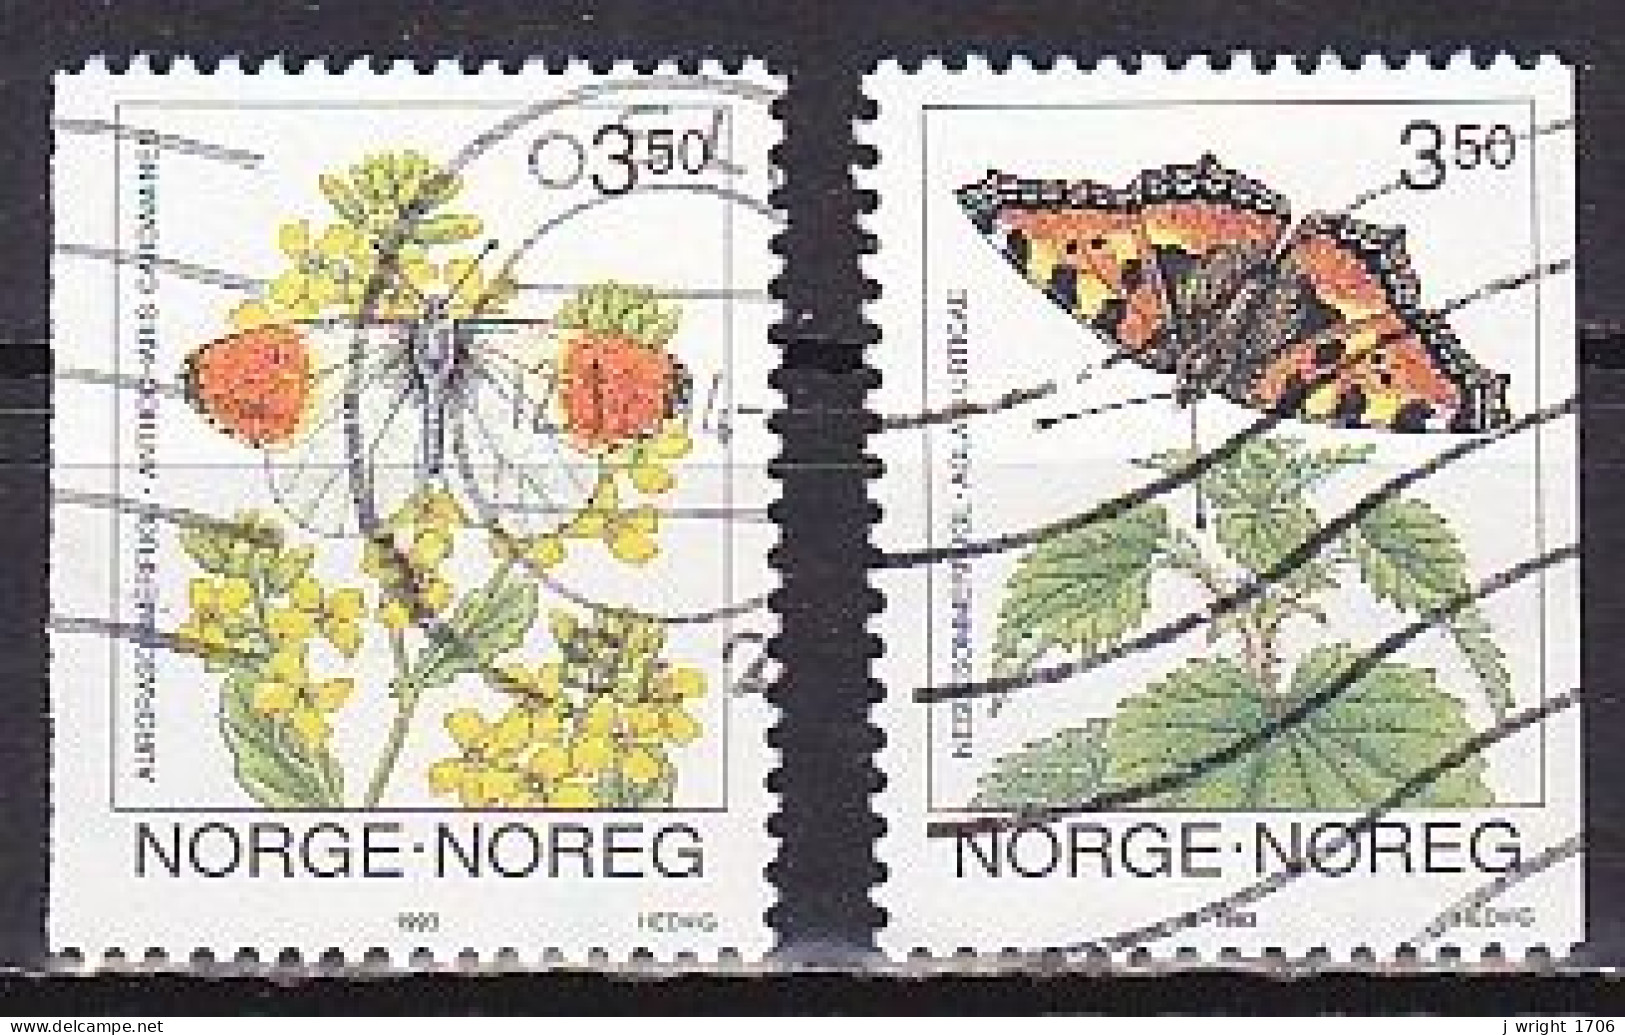 Norway, 1993, Butterflies, Set, USED - Usati